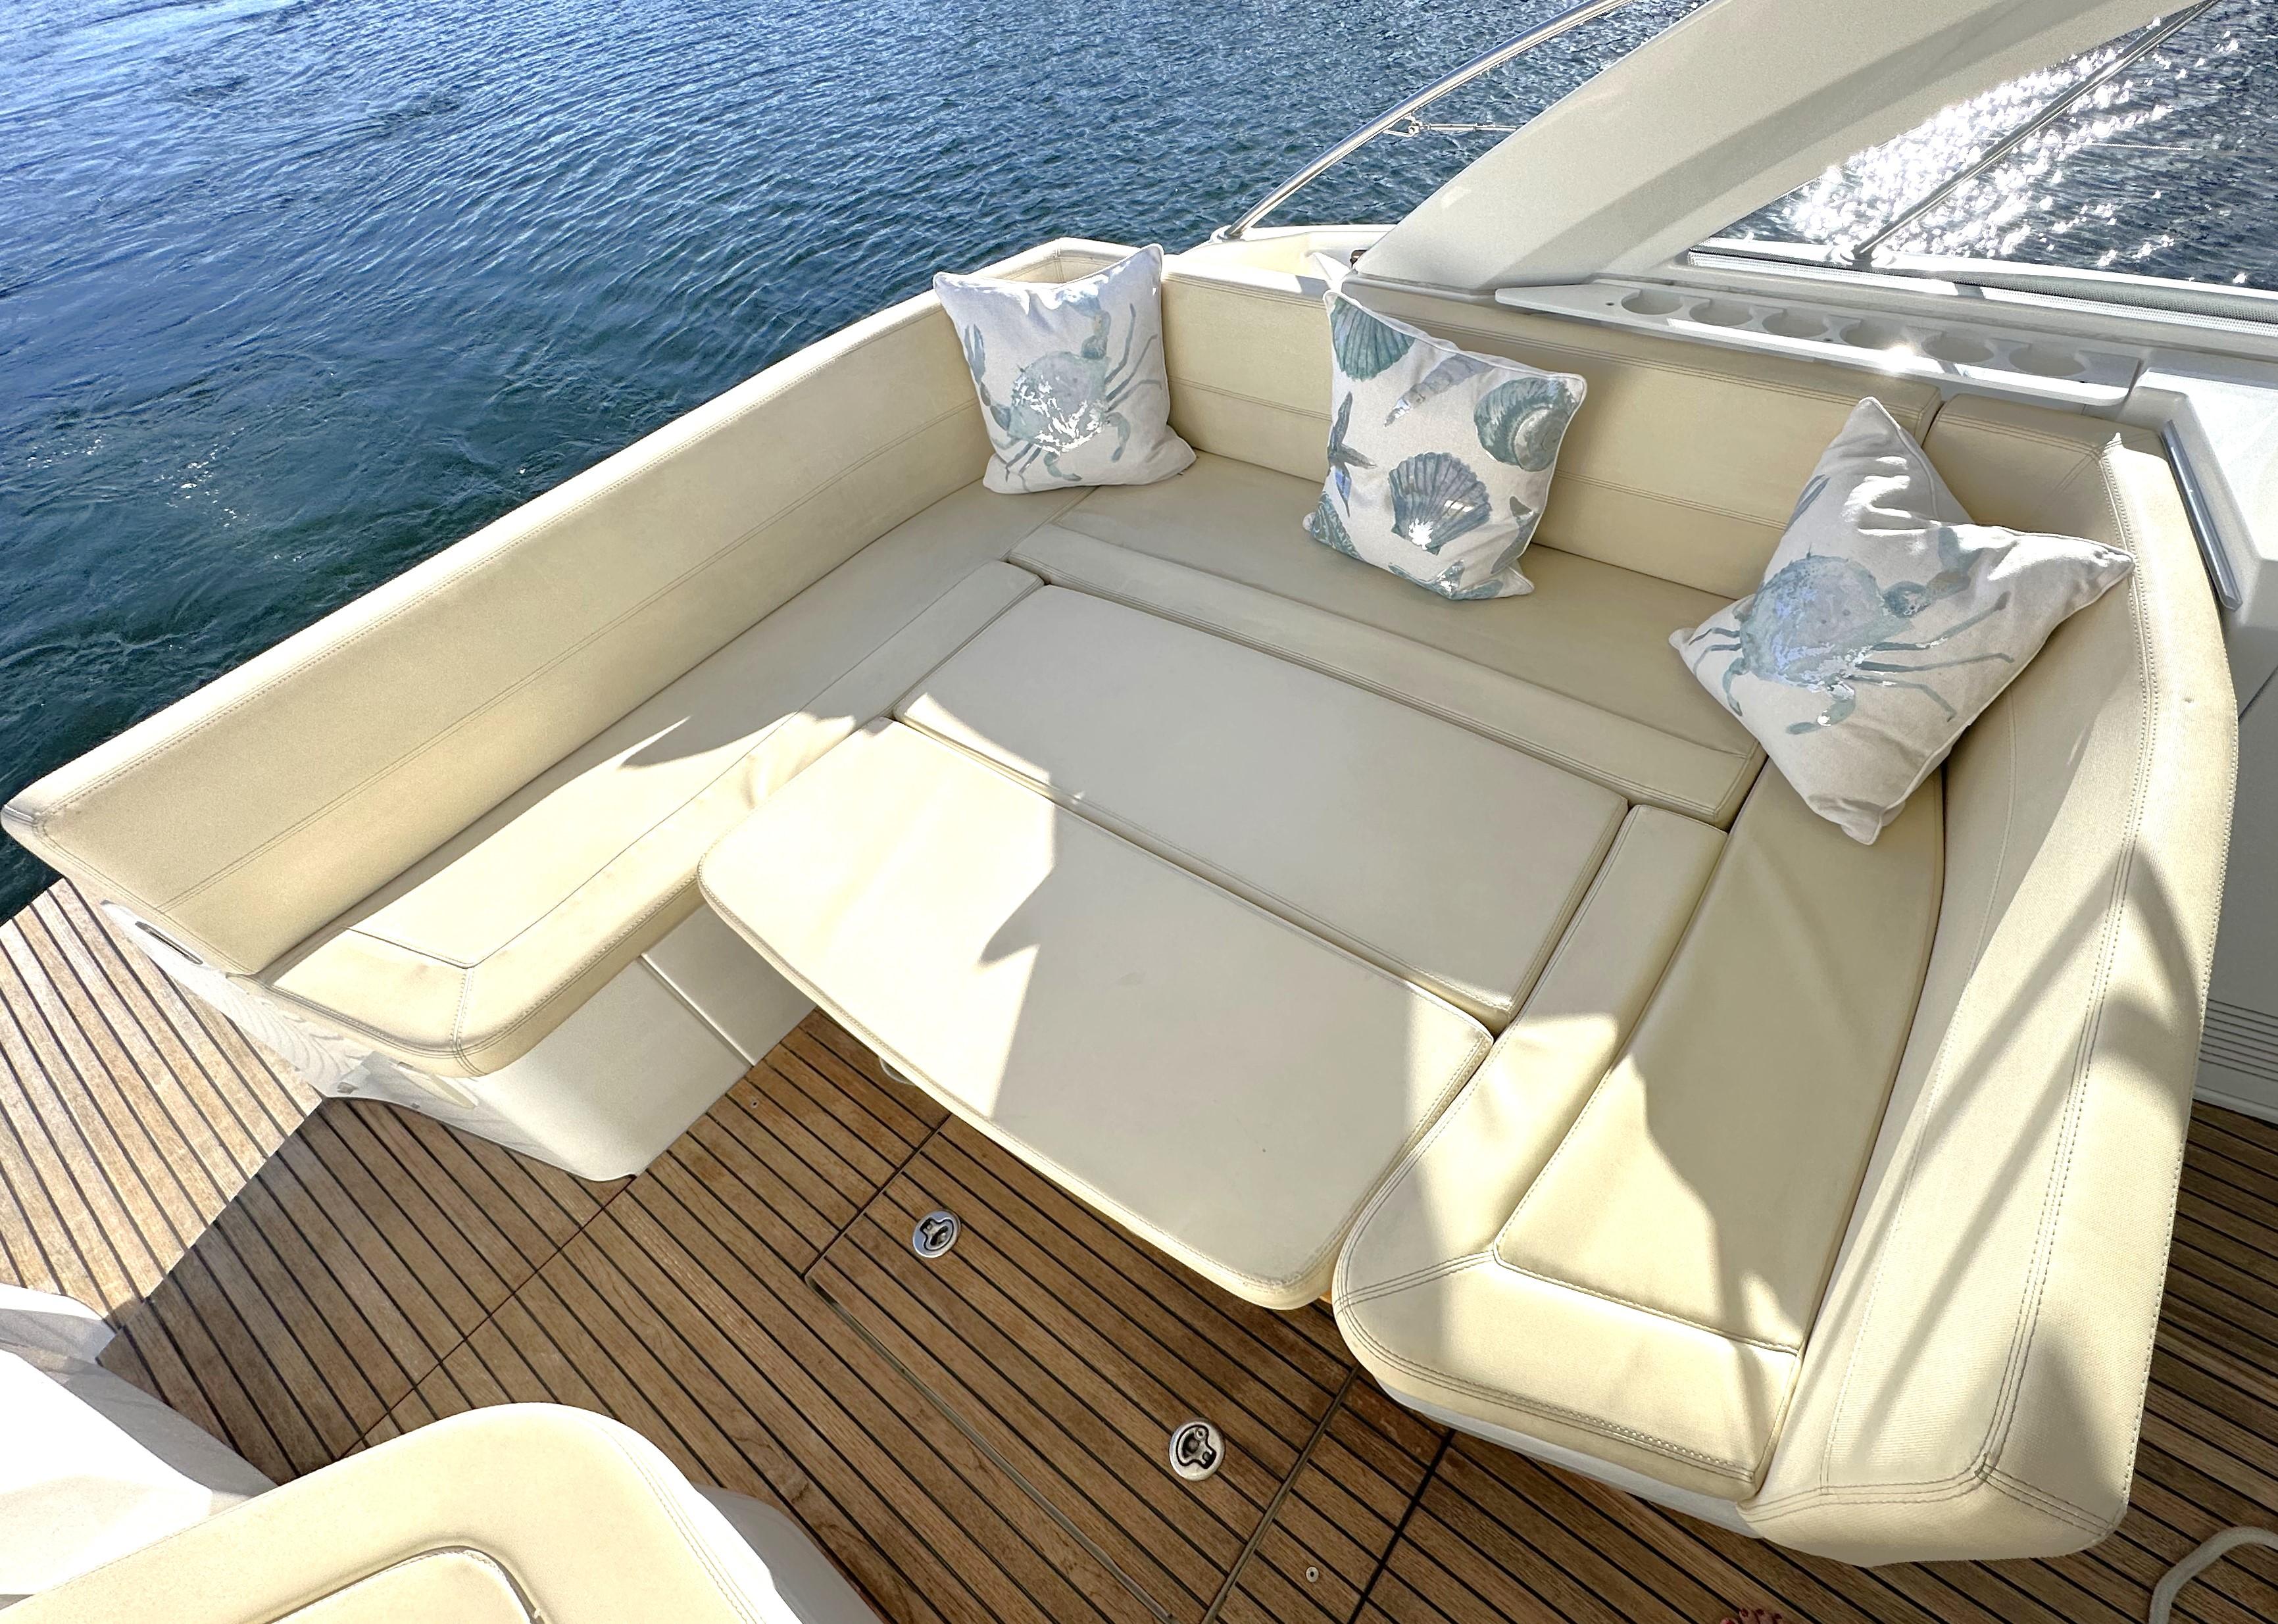 38′ Beneteau 2016 Yacht for Sale